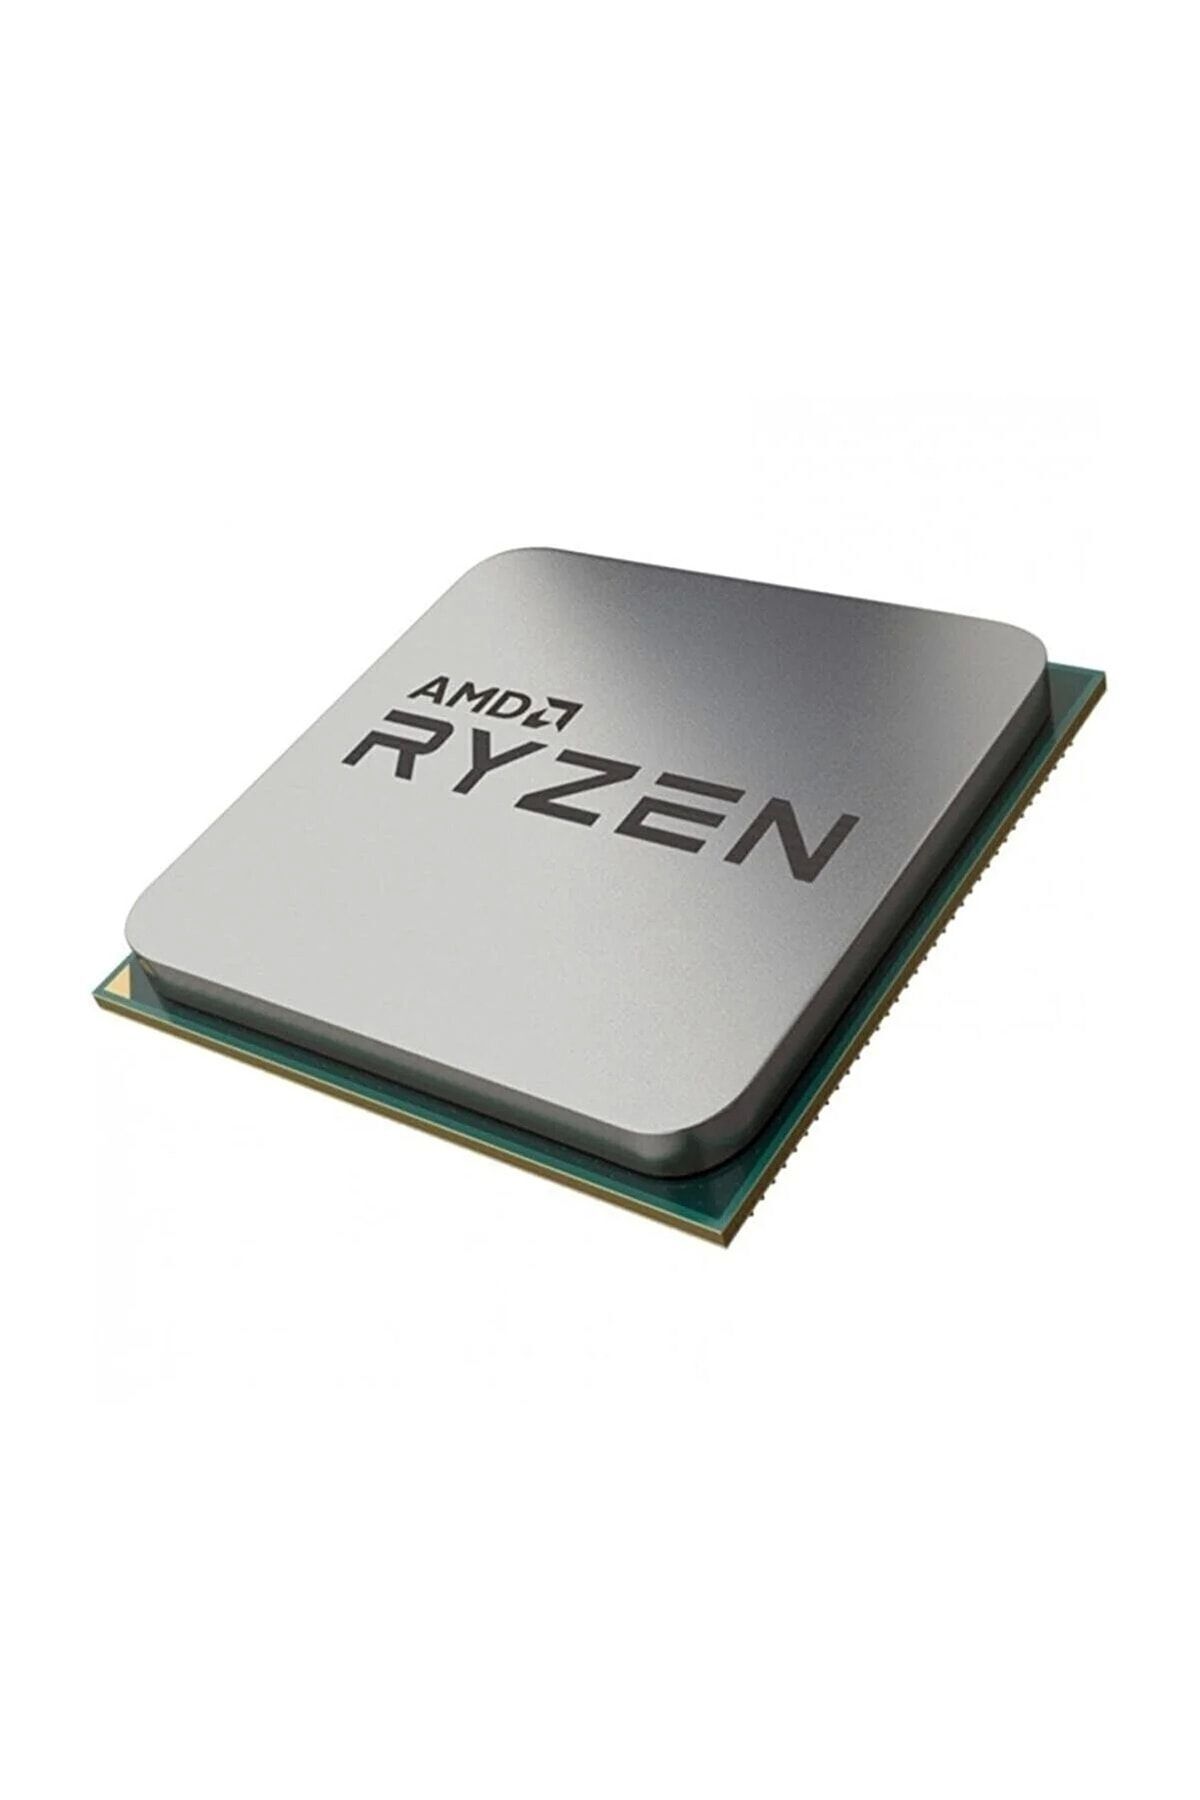 Amd Ryzen 5 5600g 3.9ghz (turbo 4.4ghz) 6 Core 12 Threads 19mb Cache 7nm Am4 Işlemci